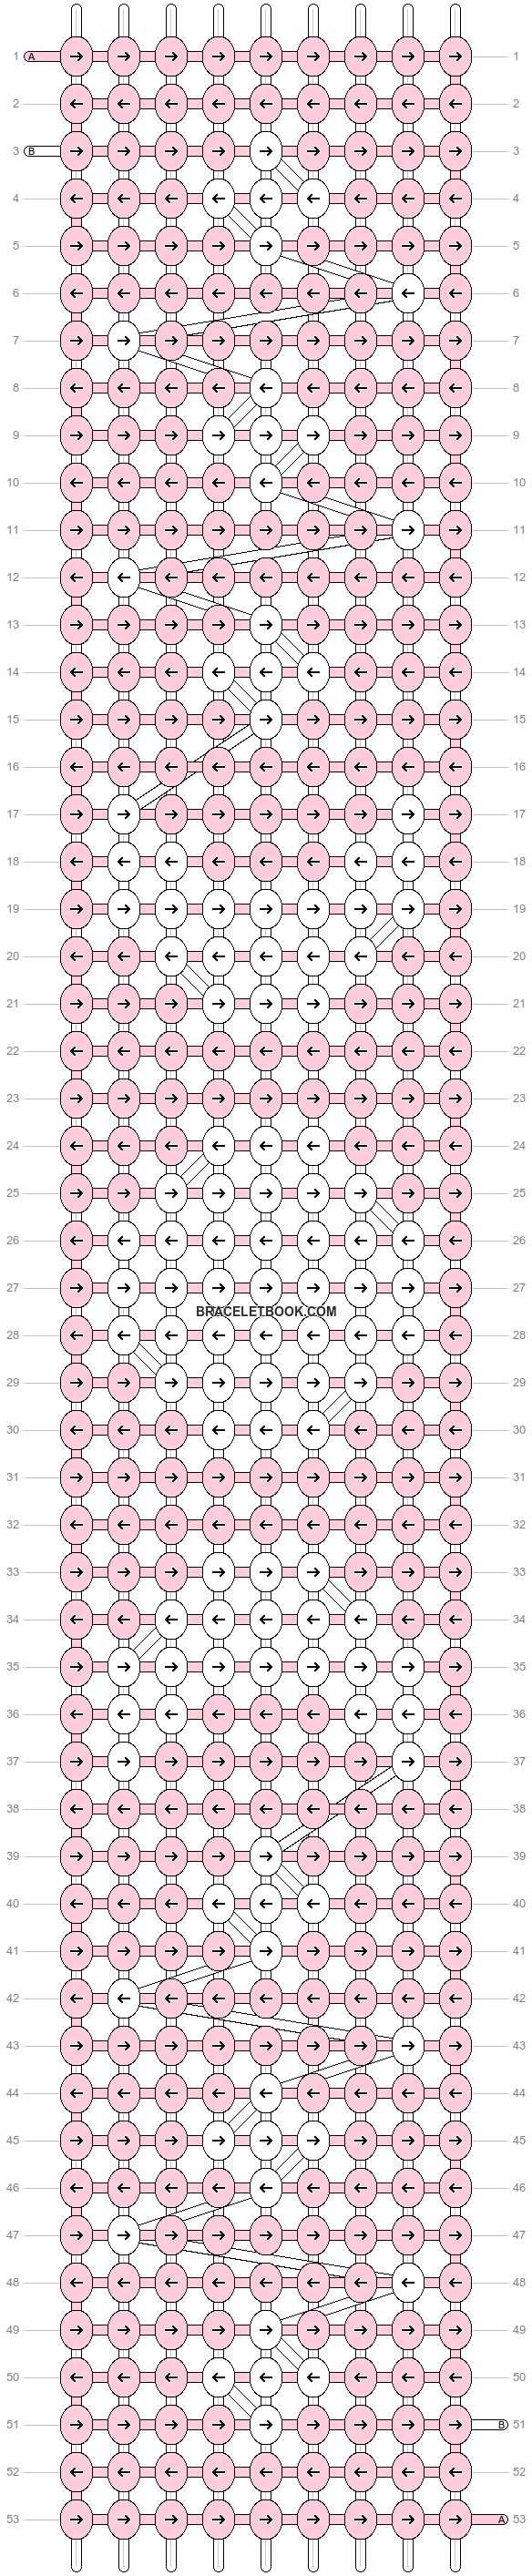 Alpha pattern #60782 variation #119025 pattern